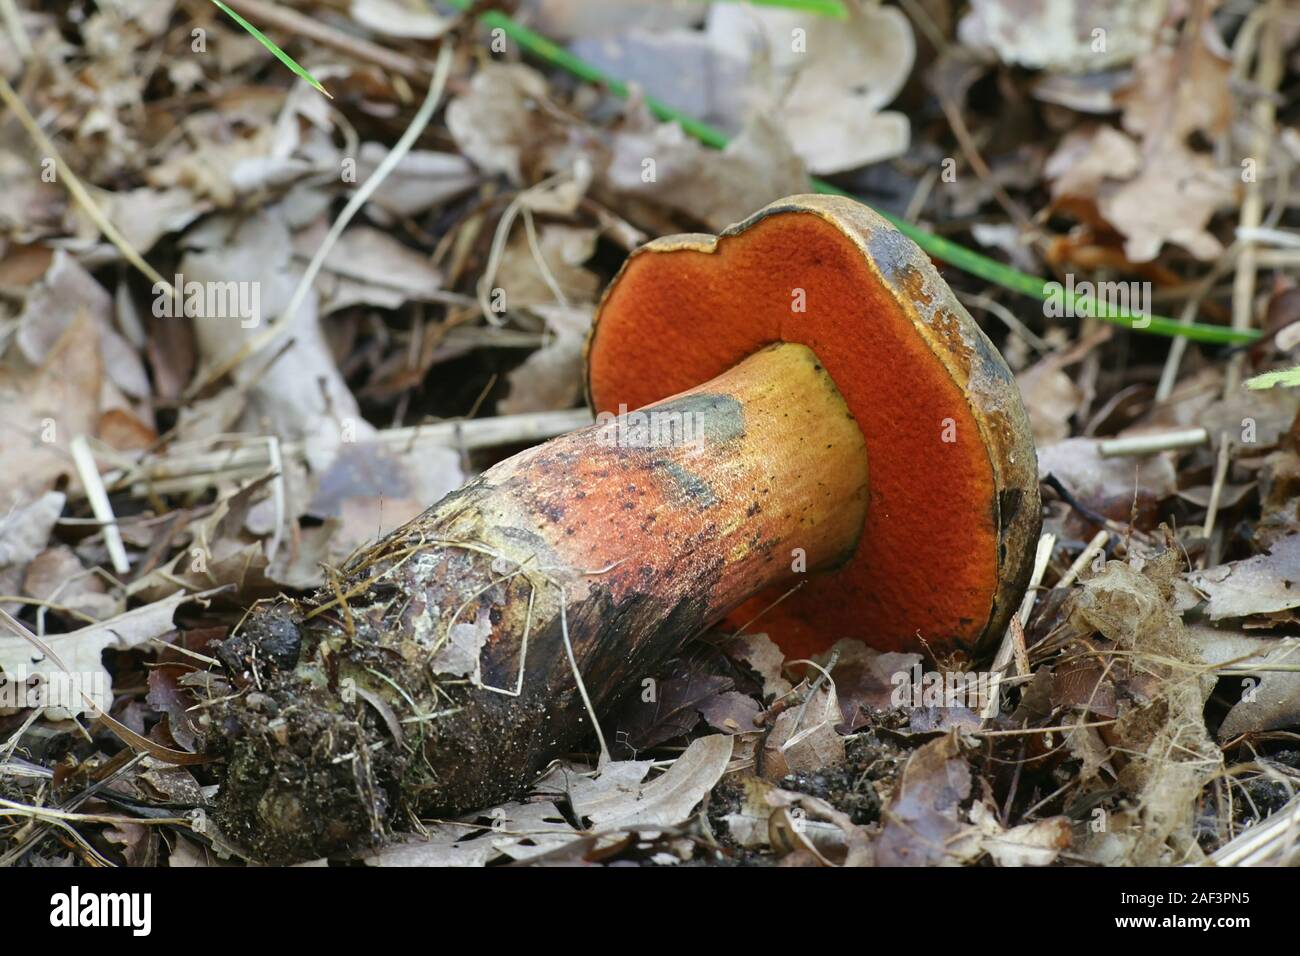 Neoboletus luridiformis, until 2014 as Boletus luridiformis, known as the scarletina bolete, wild mushroom from Finland Stock Photo